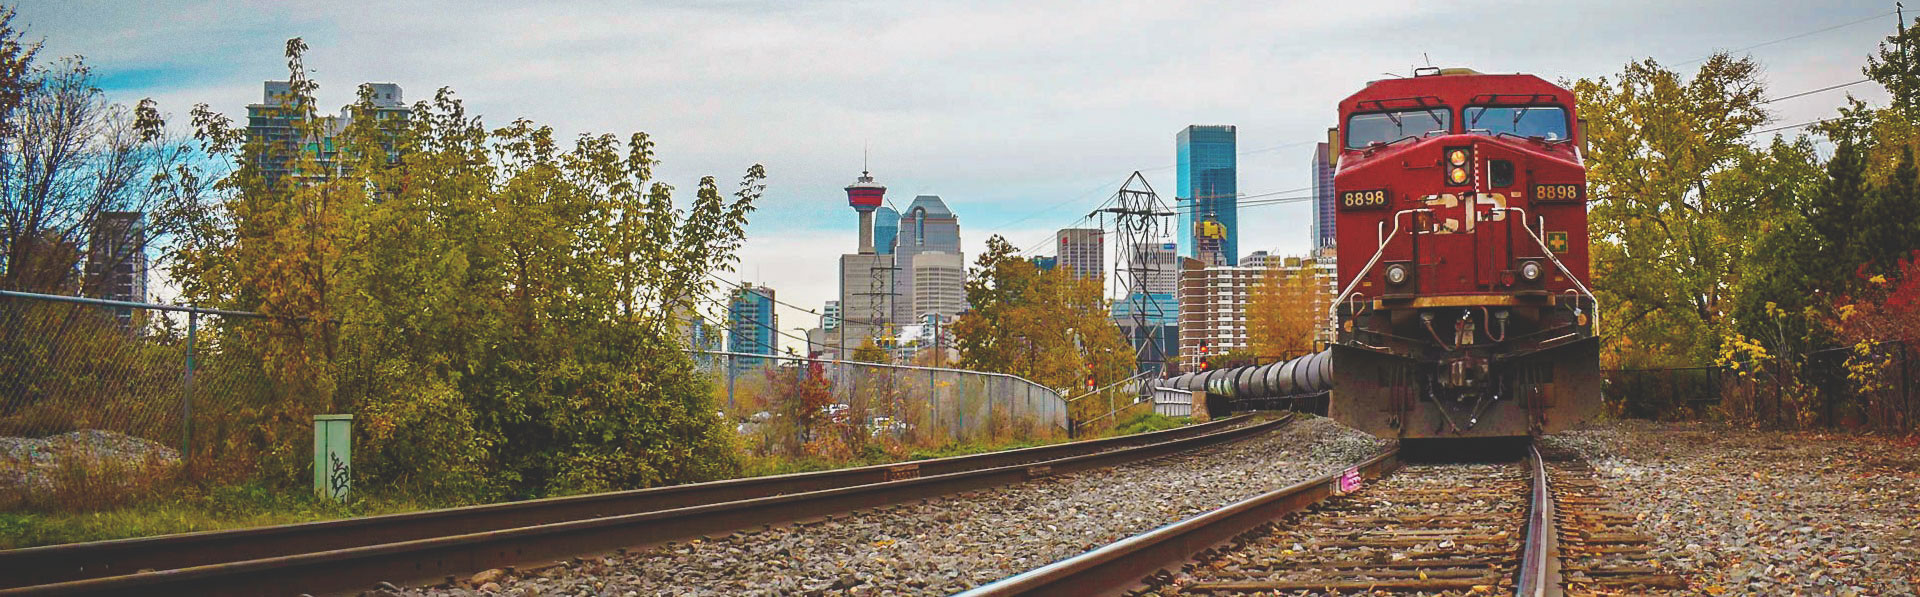 Trains in Calgary